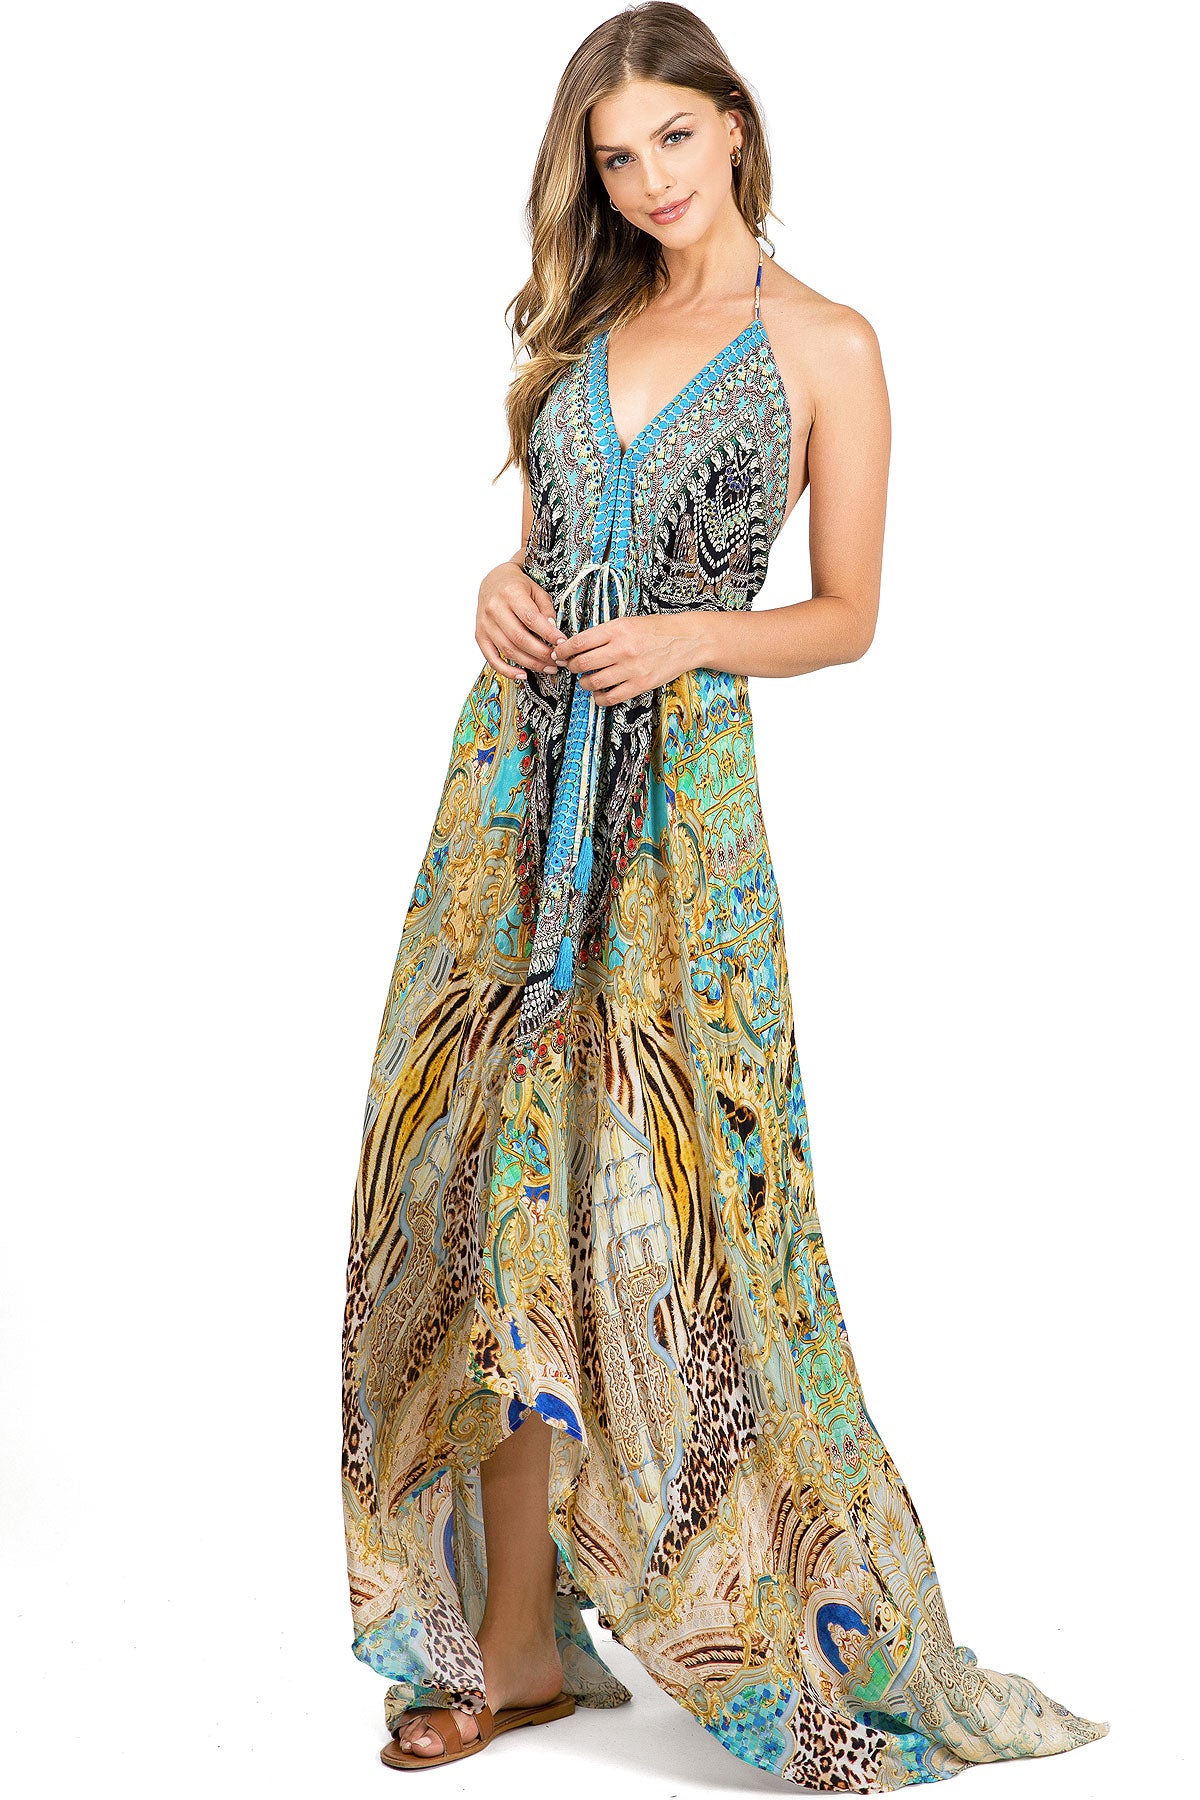 South Beach Jewel Maxi Dress